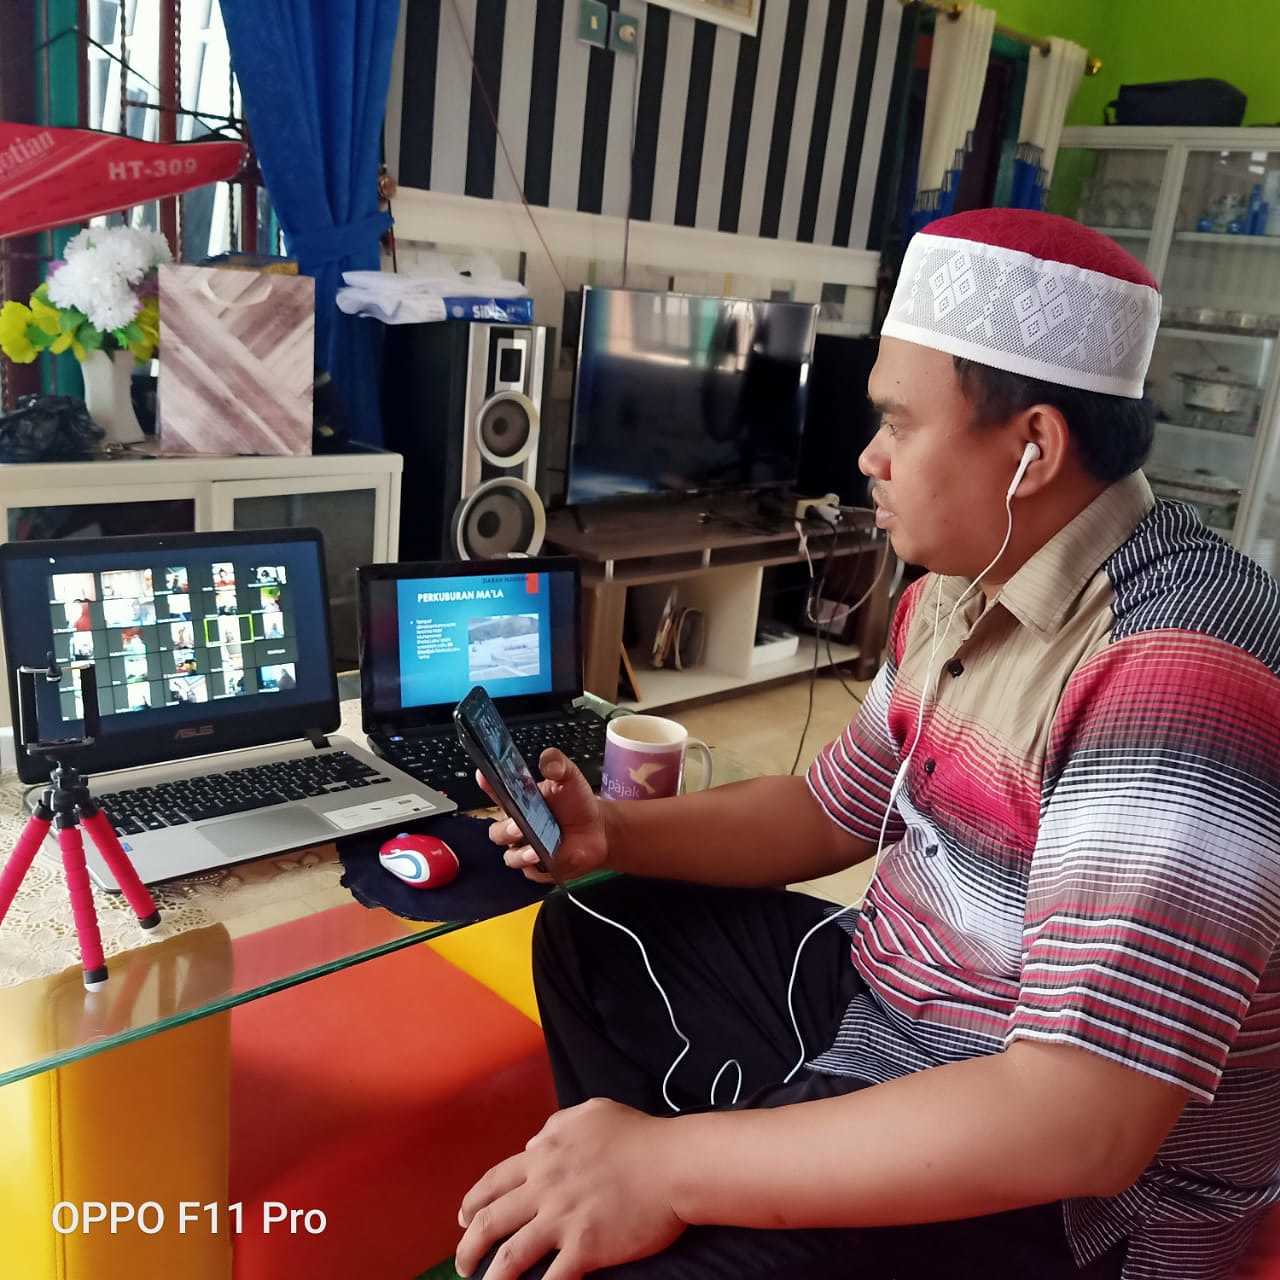 Manasik Haji Akan Digelar ‘Online’ Antisipasi Penerapan PSBB.